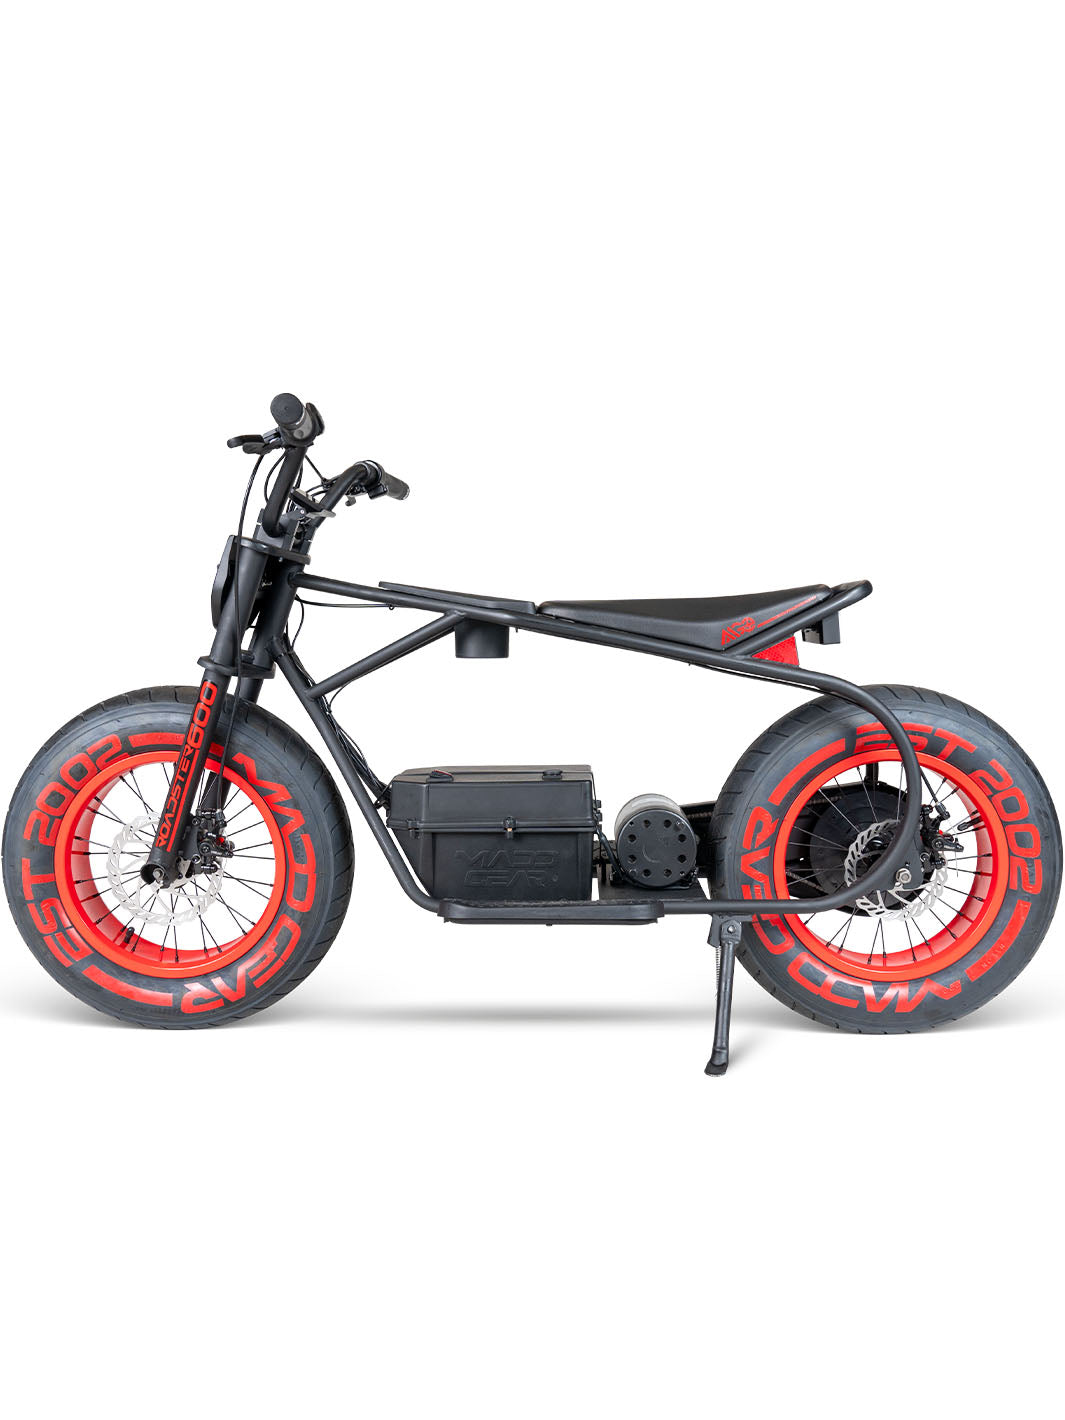 Madd Gear Roadster 600 Electric Mini Bike E-Bike GoTrax Jetson Kids Teens Adults Black Red